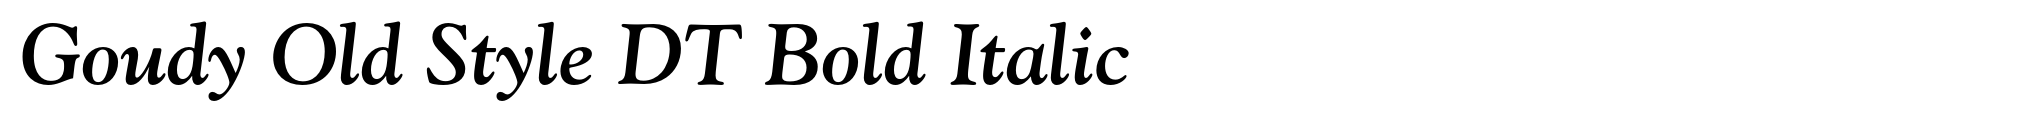 Goudy Old Style DT Bold Italic image